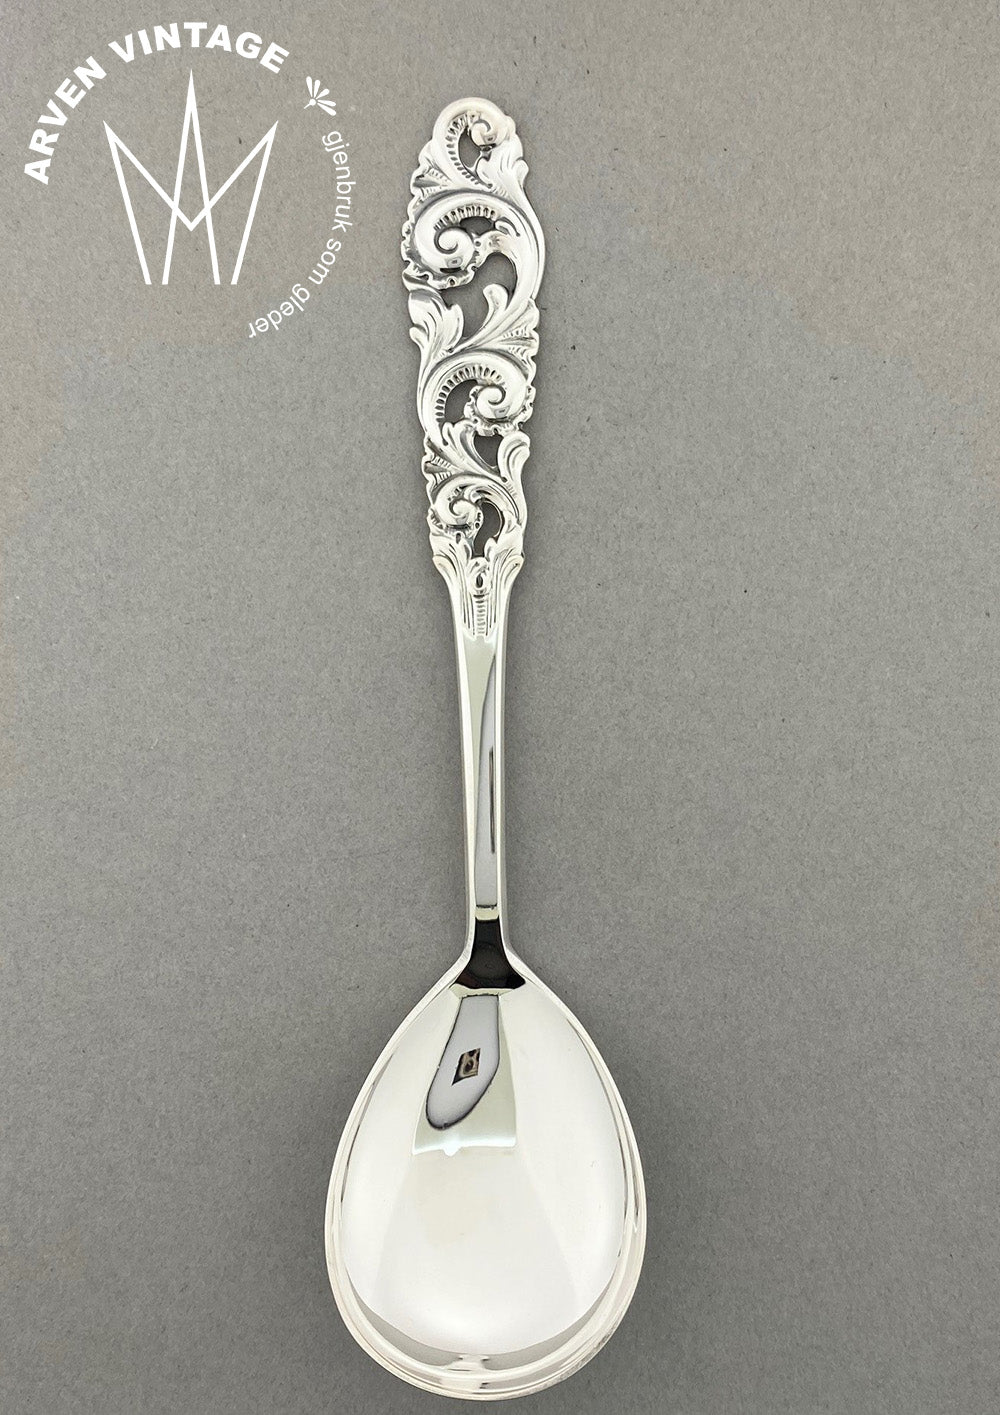 Vintage Telesilver jam spoon